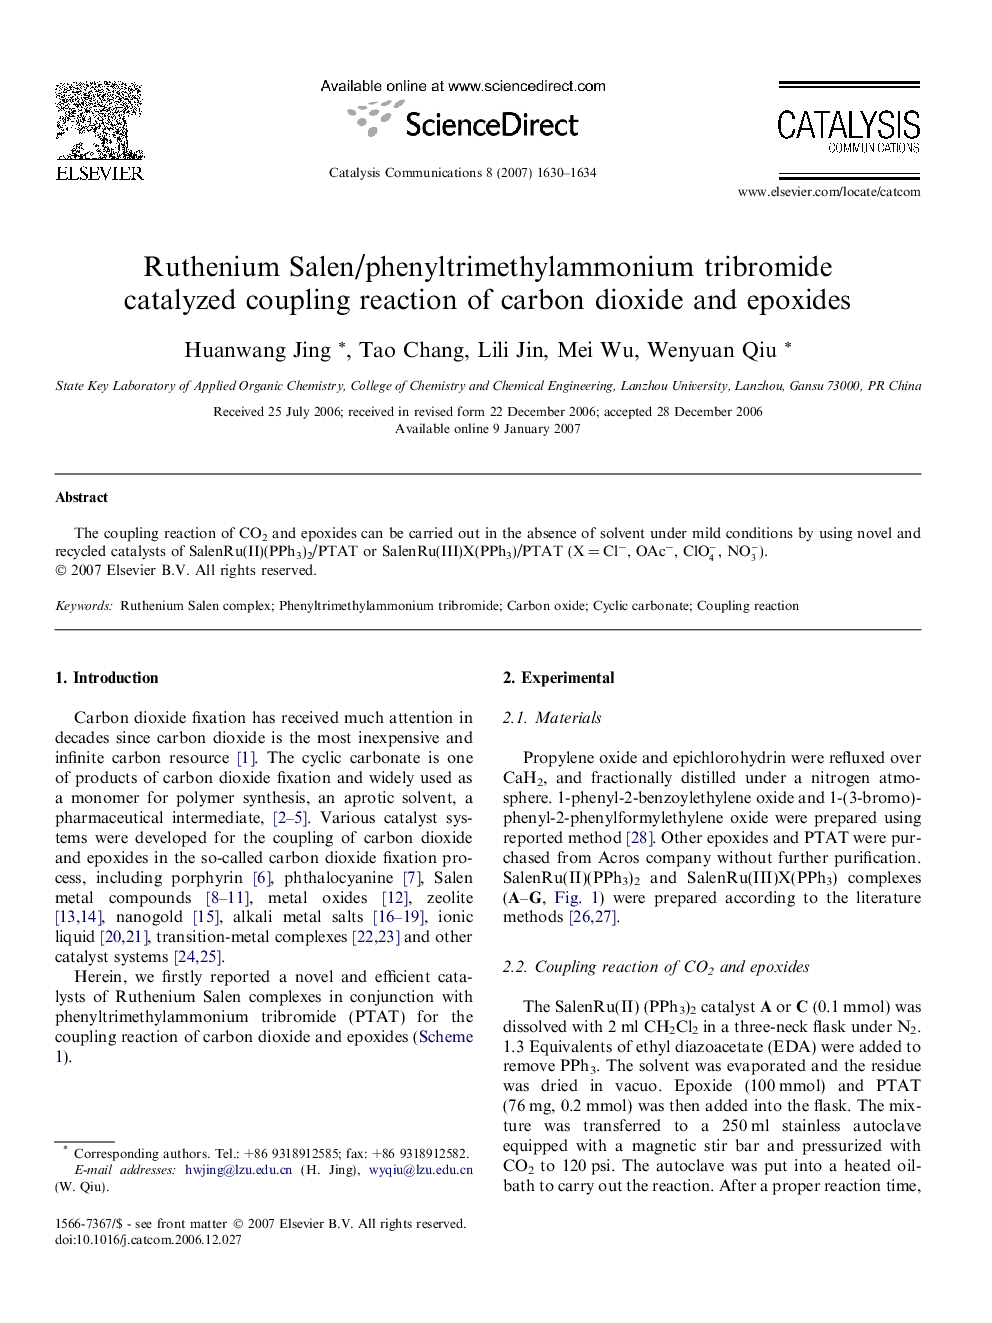 Ruthenium Salen/phenyltrimethylammonium tribromide catalyzed coupling reaction of carbon dioxide and epoxides